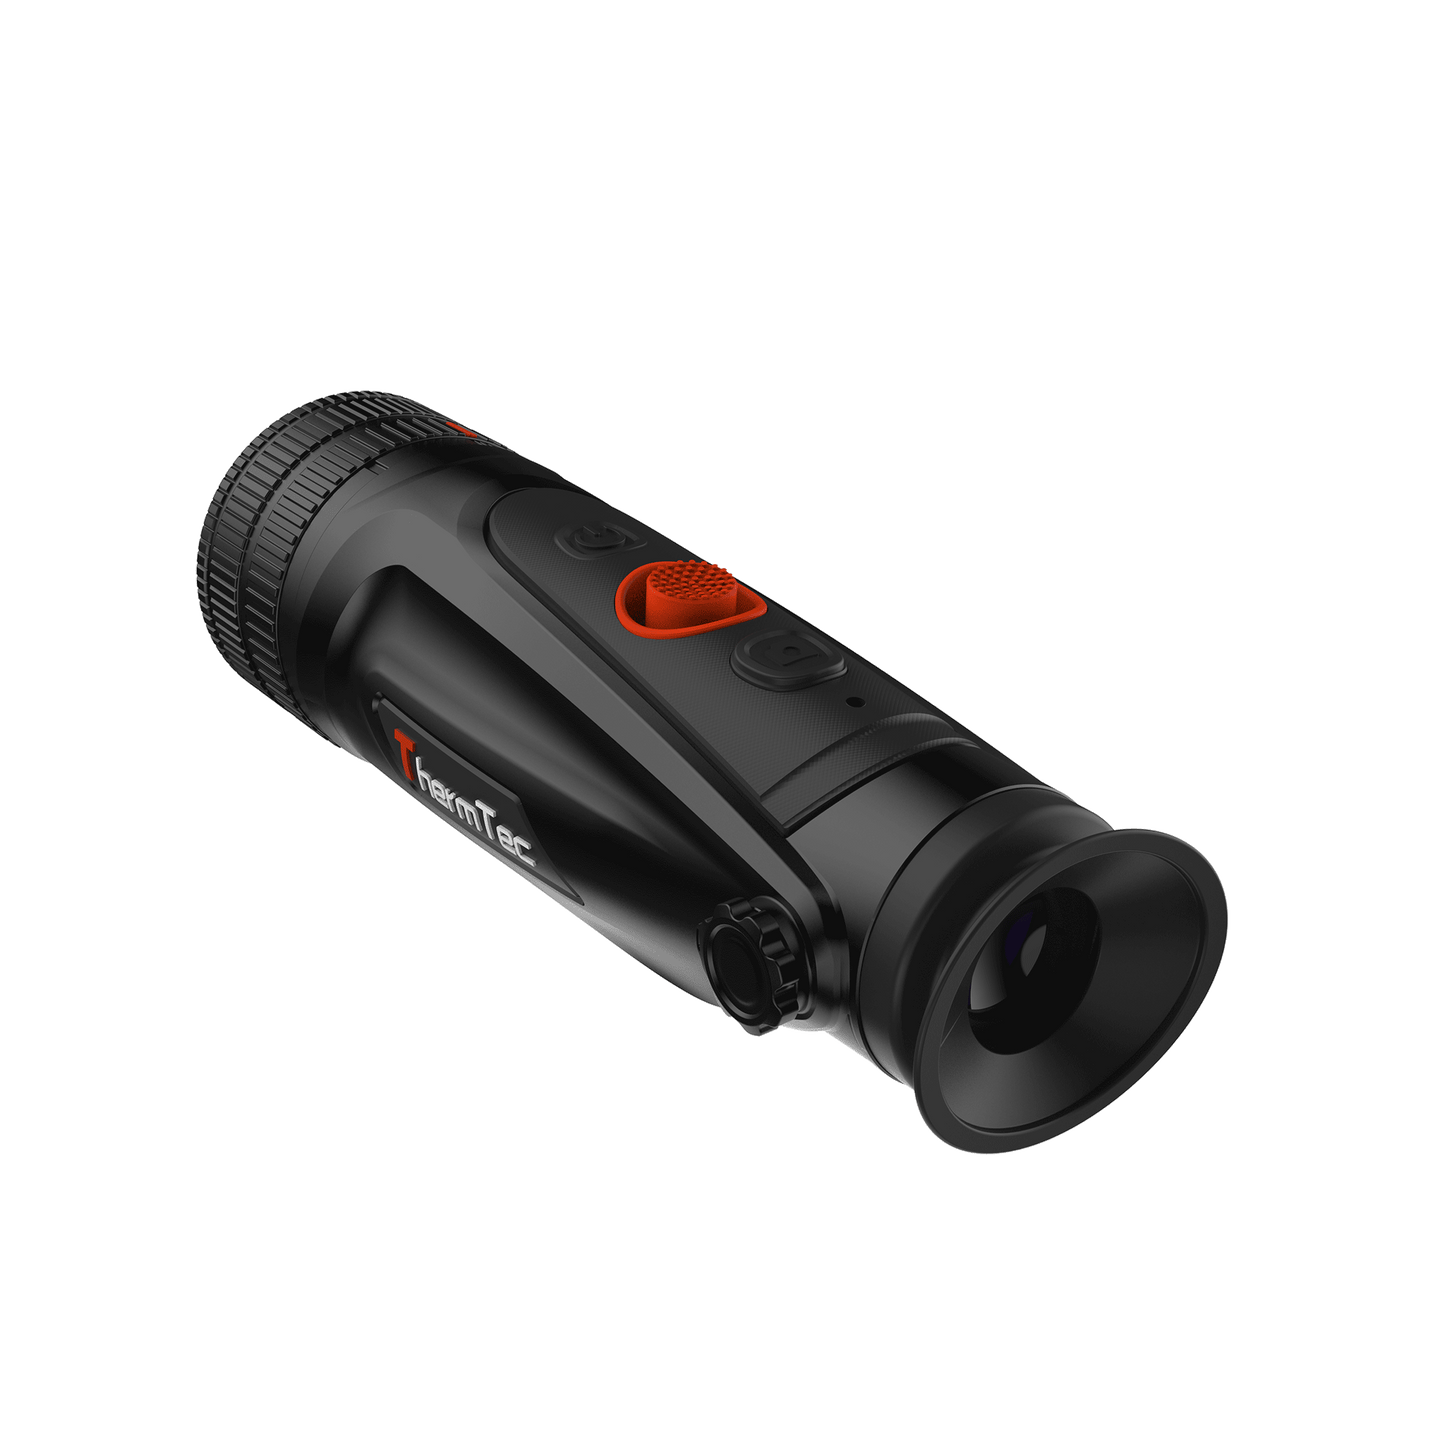 Cyclops 340D termisk spotter med optager